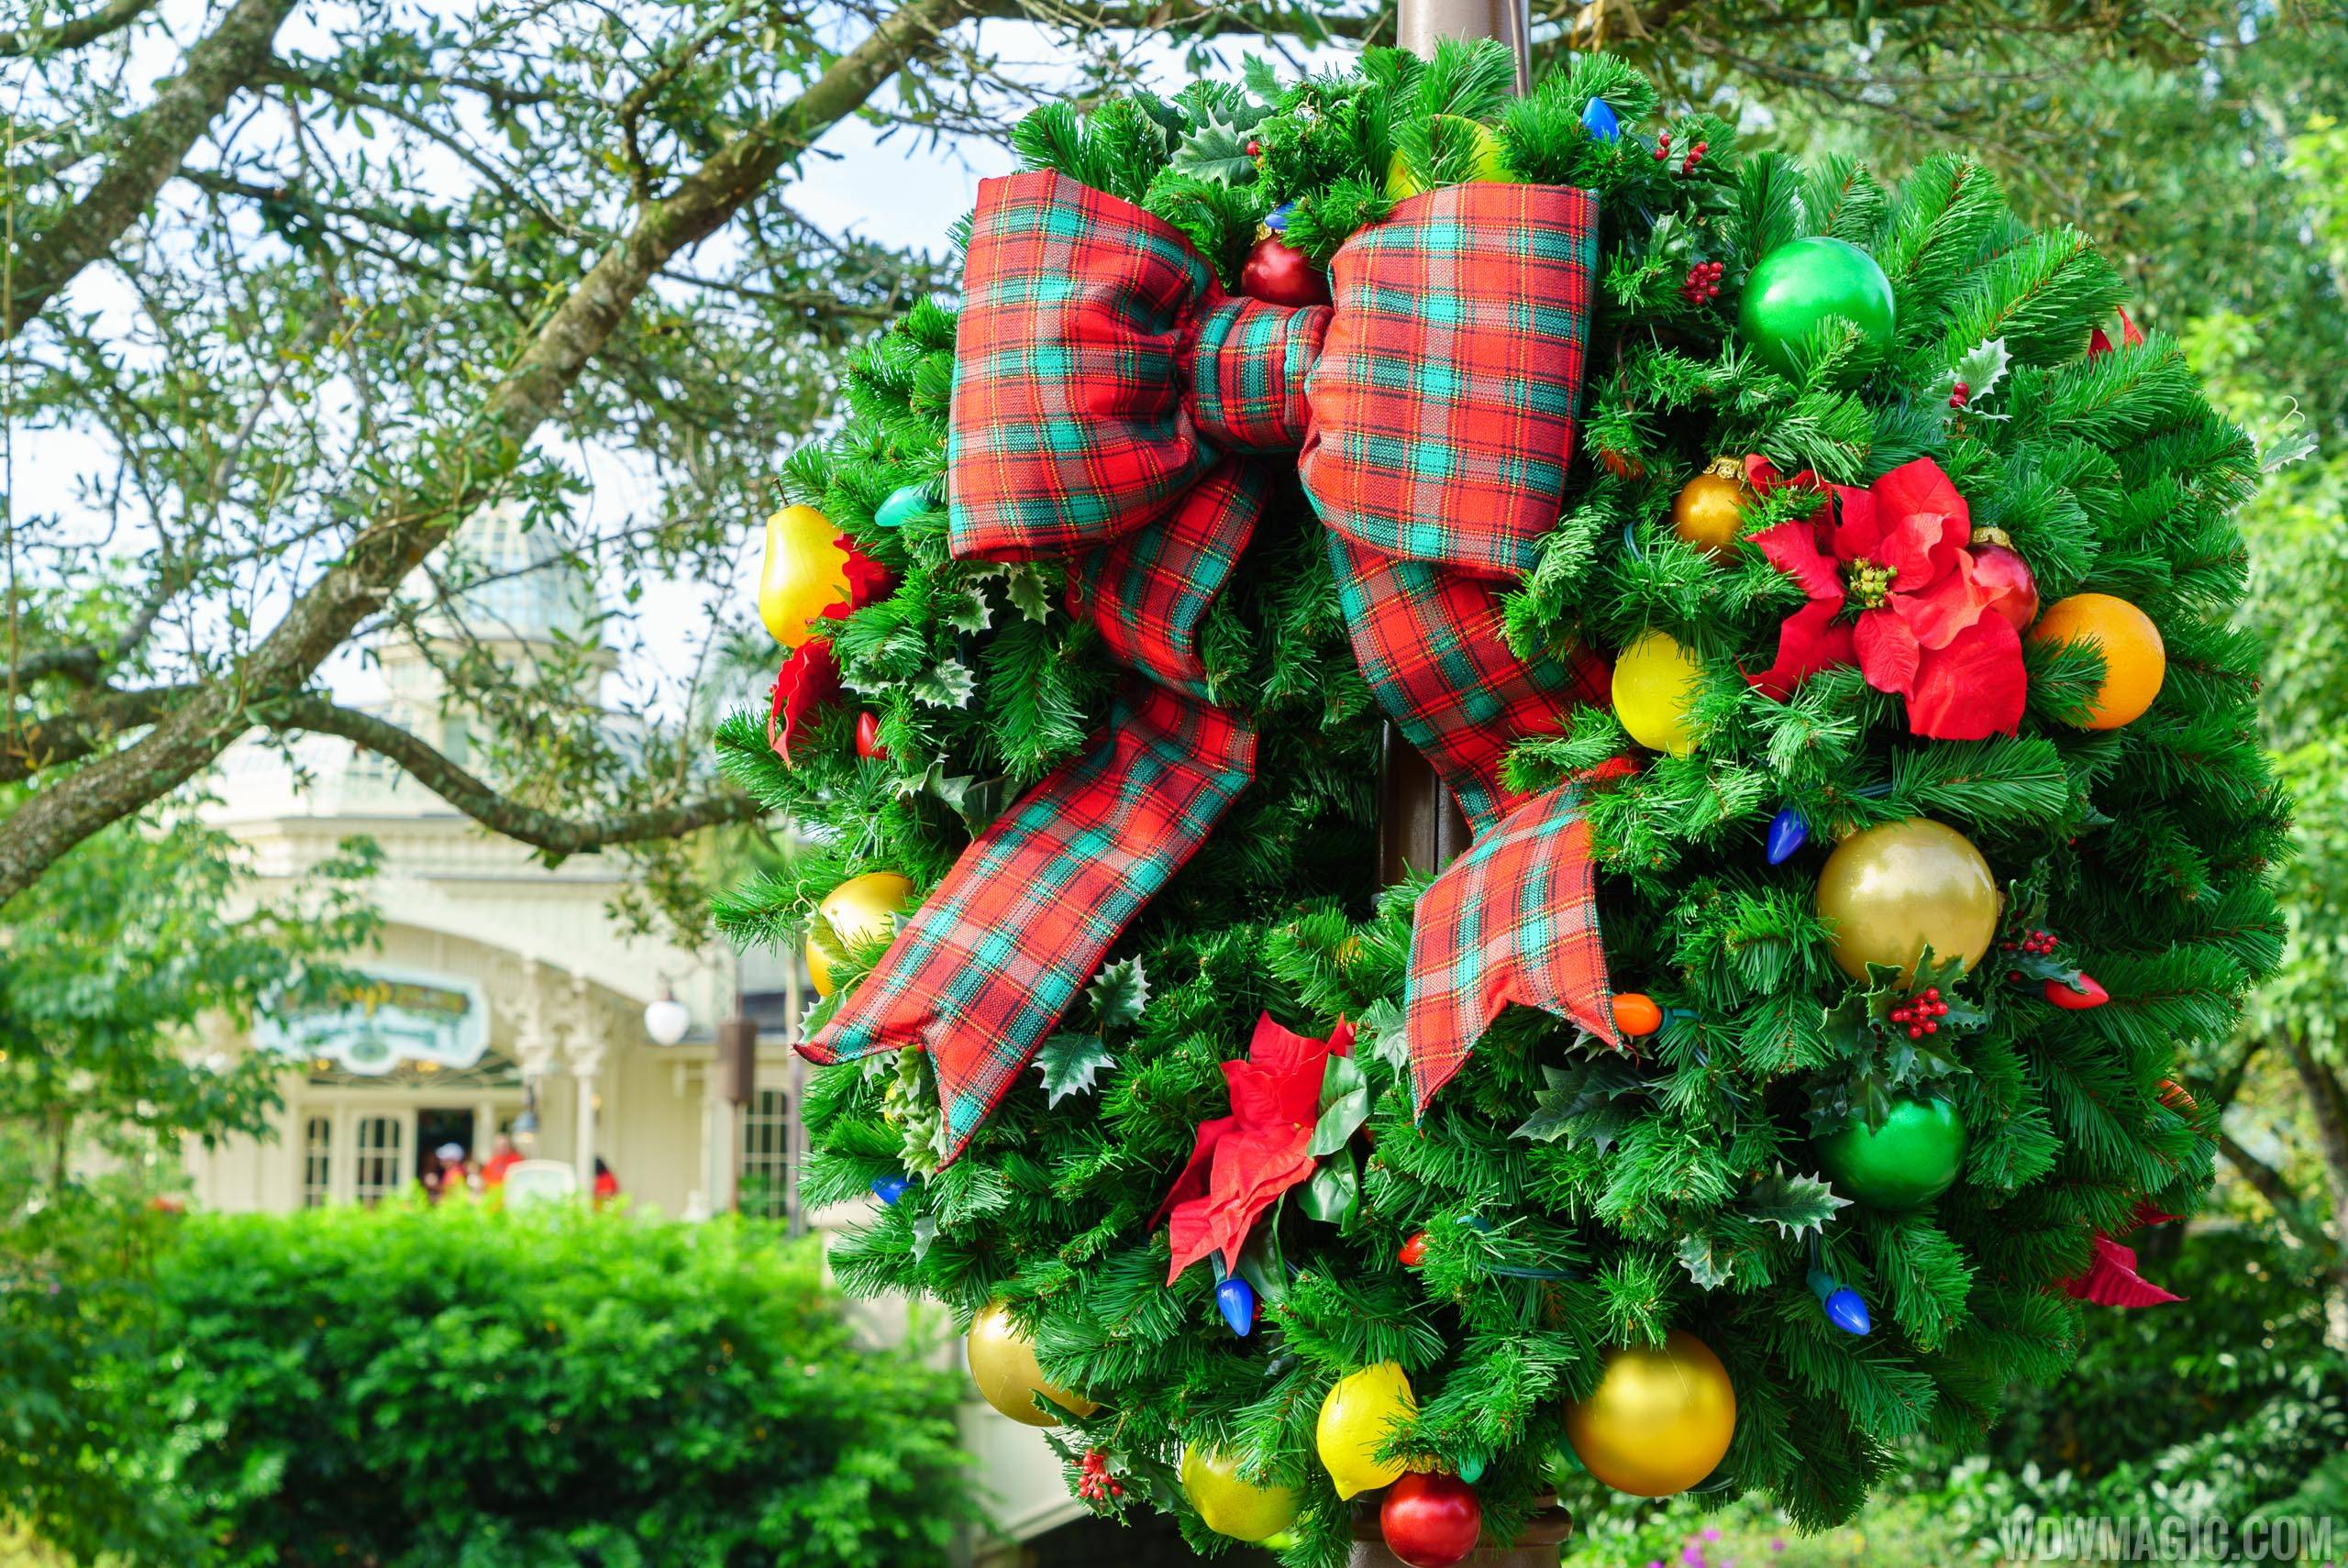 Holidays decorations at the Magic Kingdom 2016